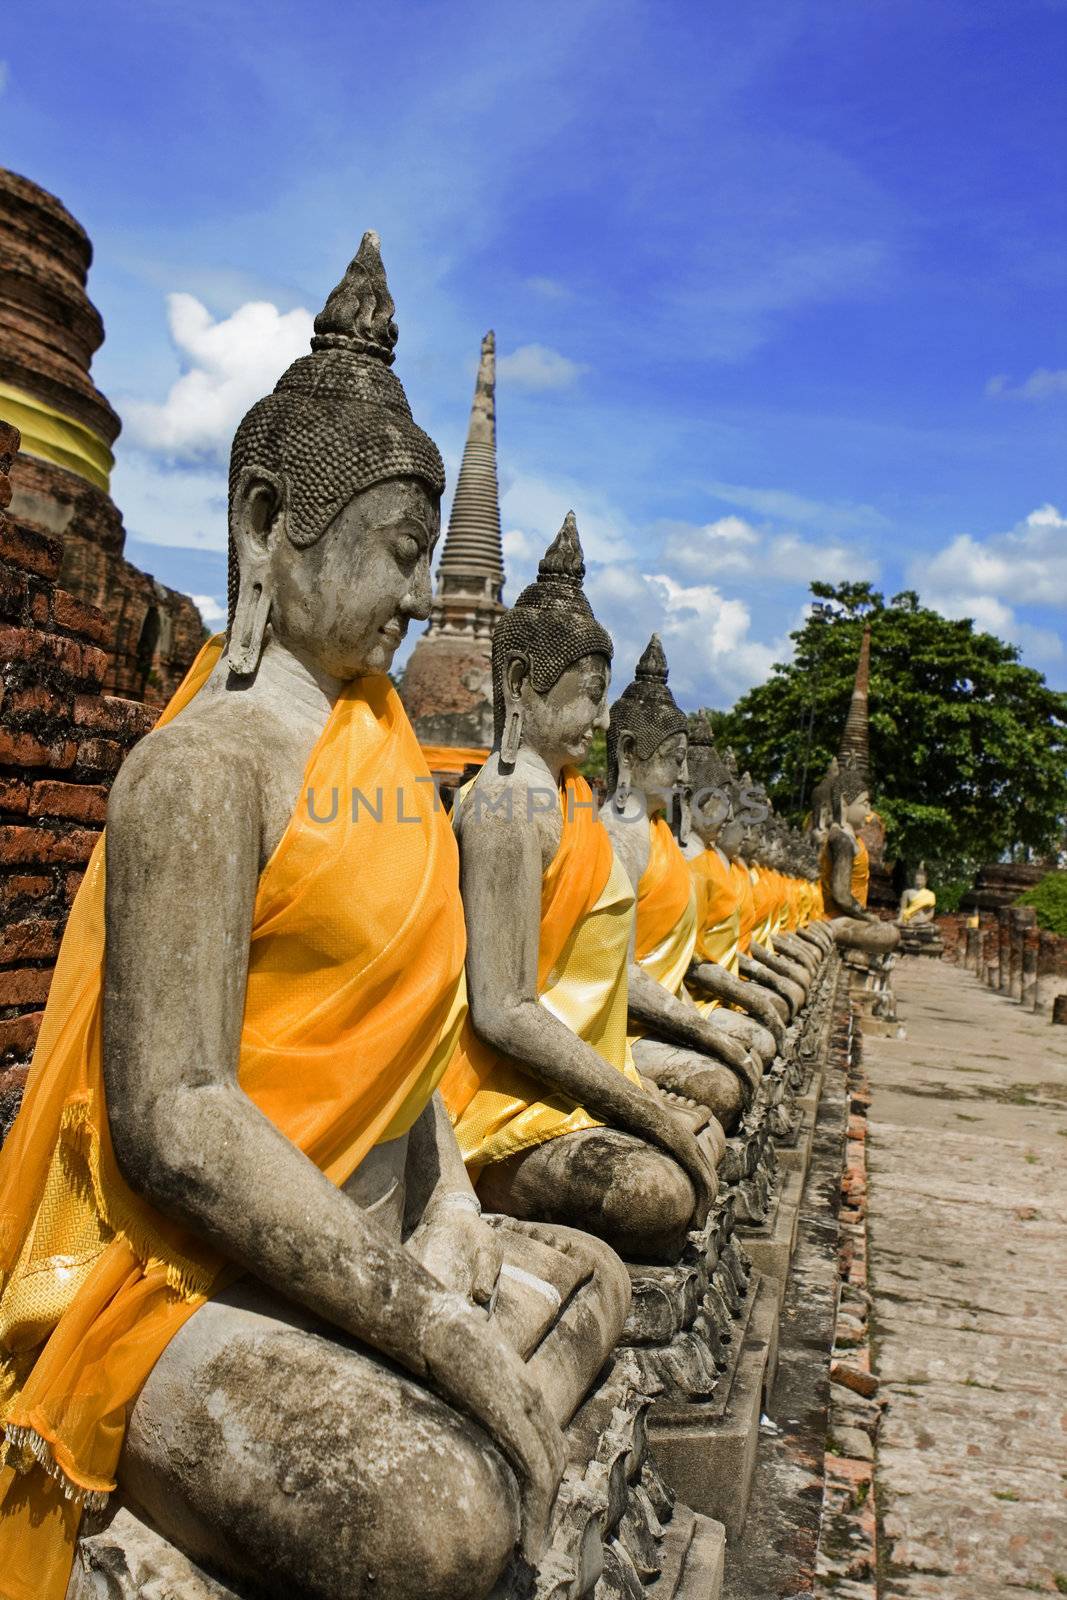 Aligned statues of Buddha in Ayutthaya, Thailand